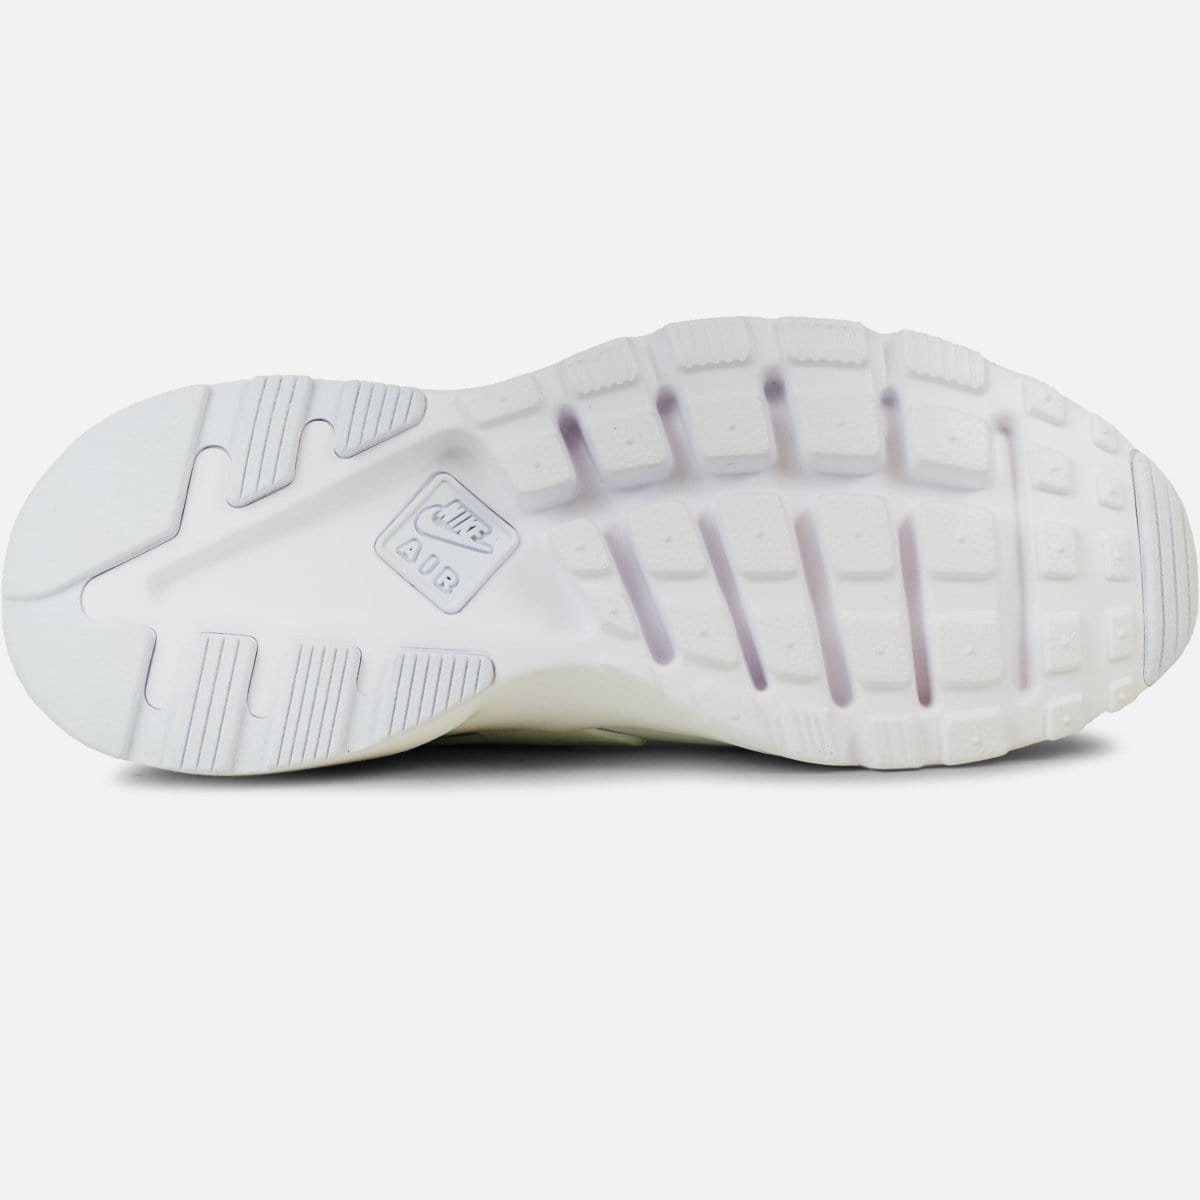 Nike Air Huarache Ultra (White/White)